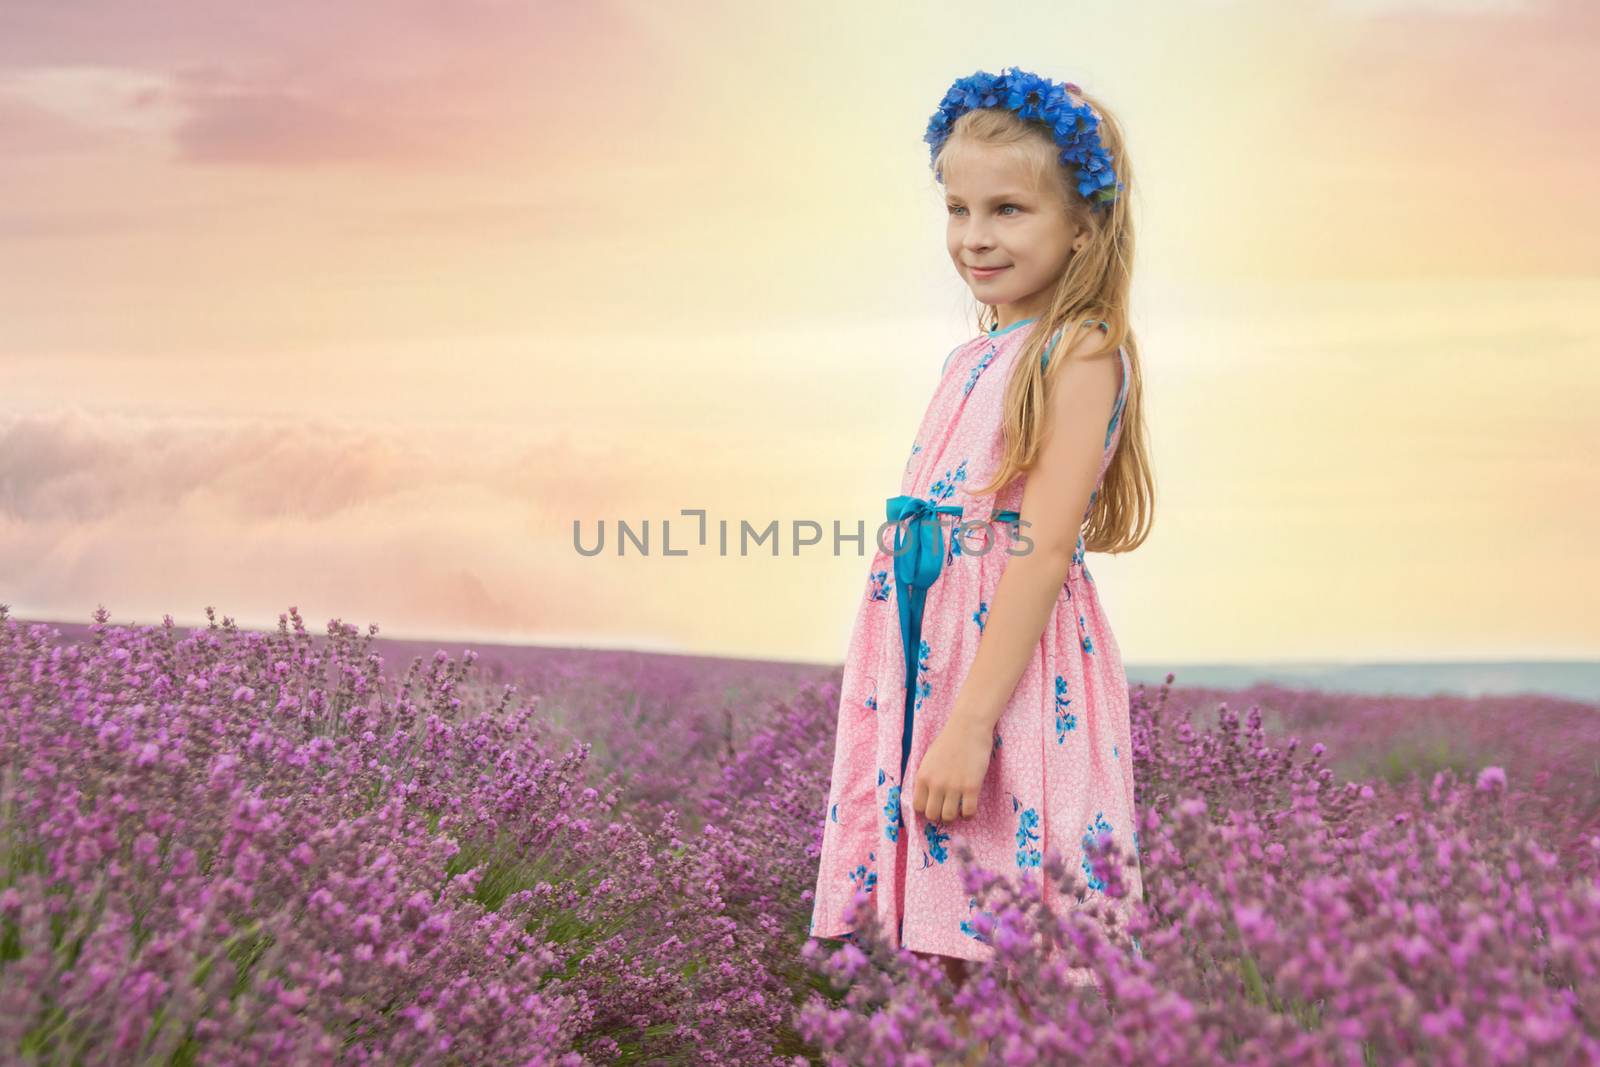 Girl among lavender fields at sunset